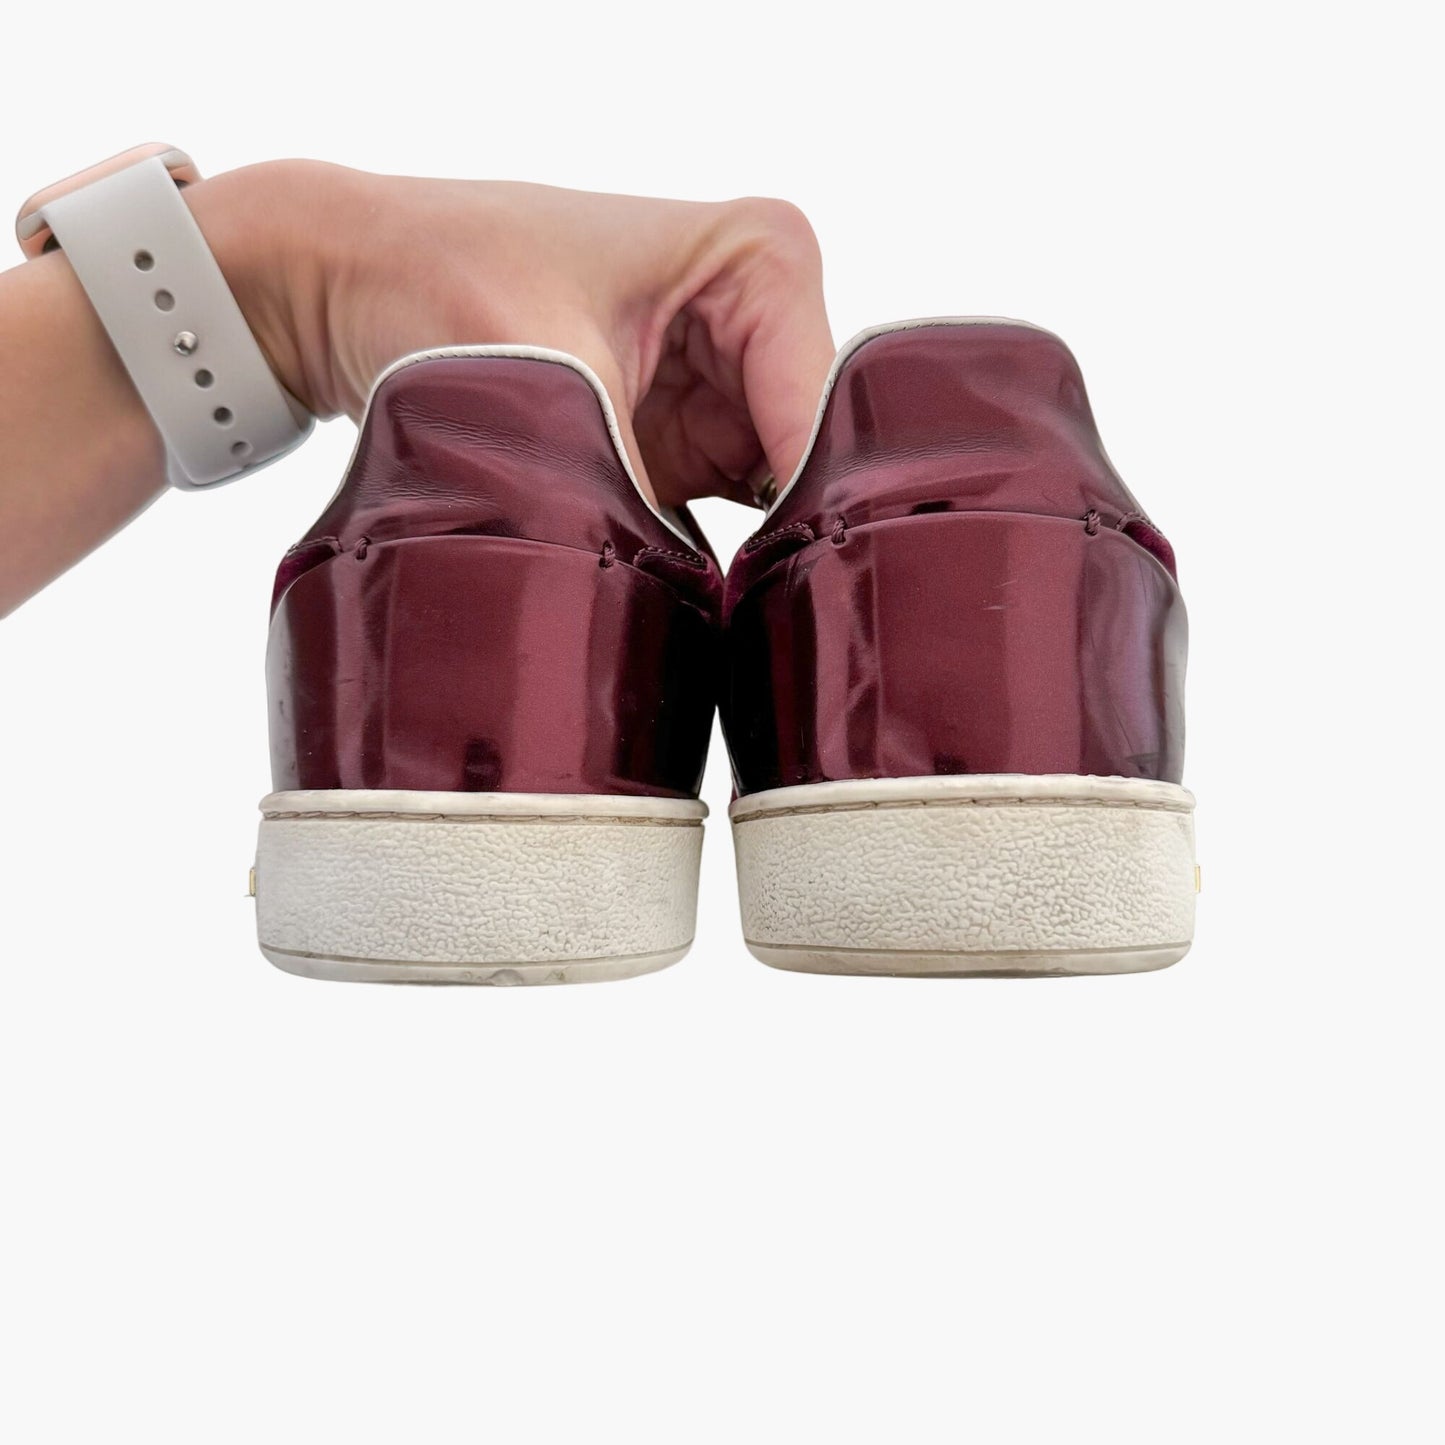 Louis Vuitton Frontrow Sneakers in Red Velvet Monogram Size 39